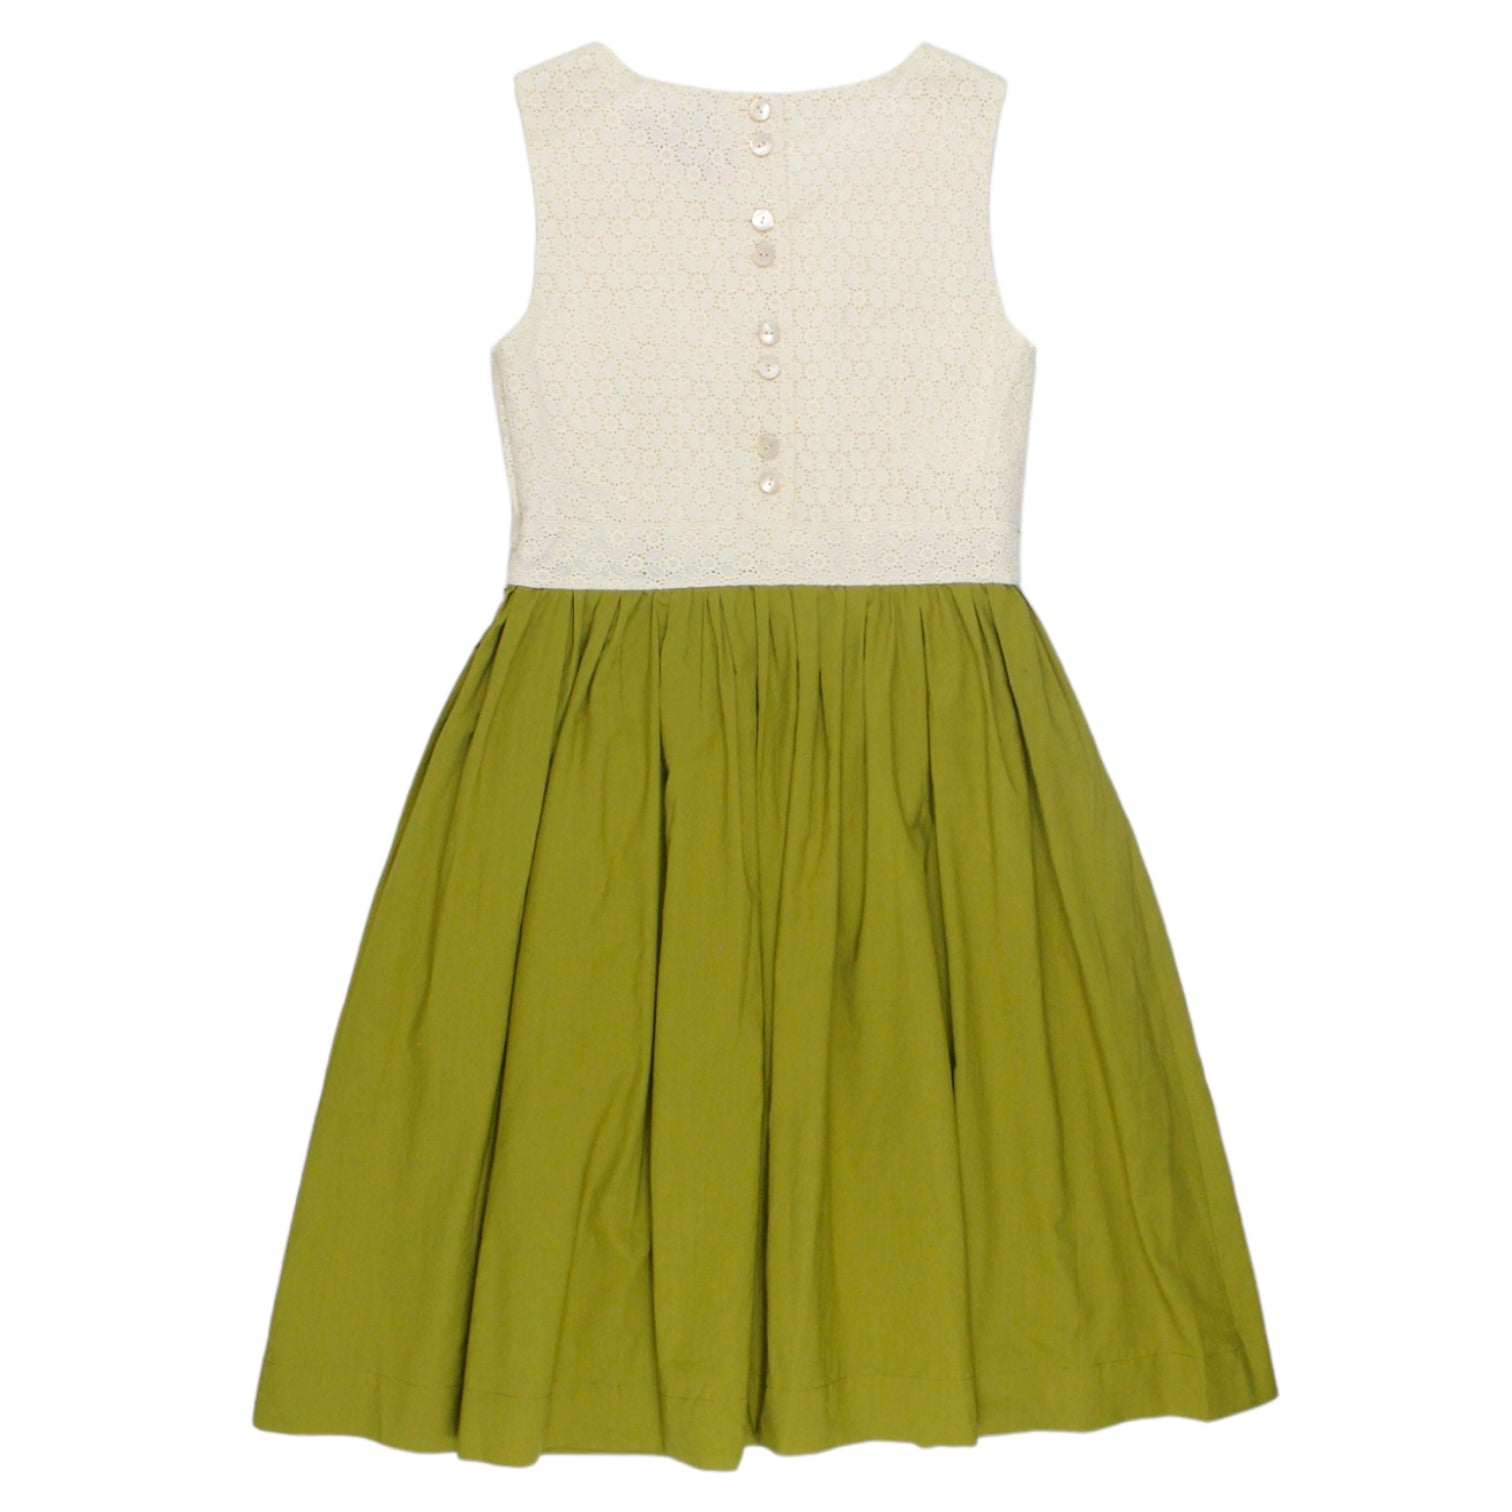 Orla Kiely Cream/Green Broderie Anglais Dress